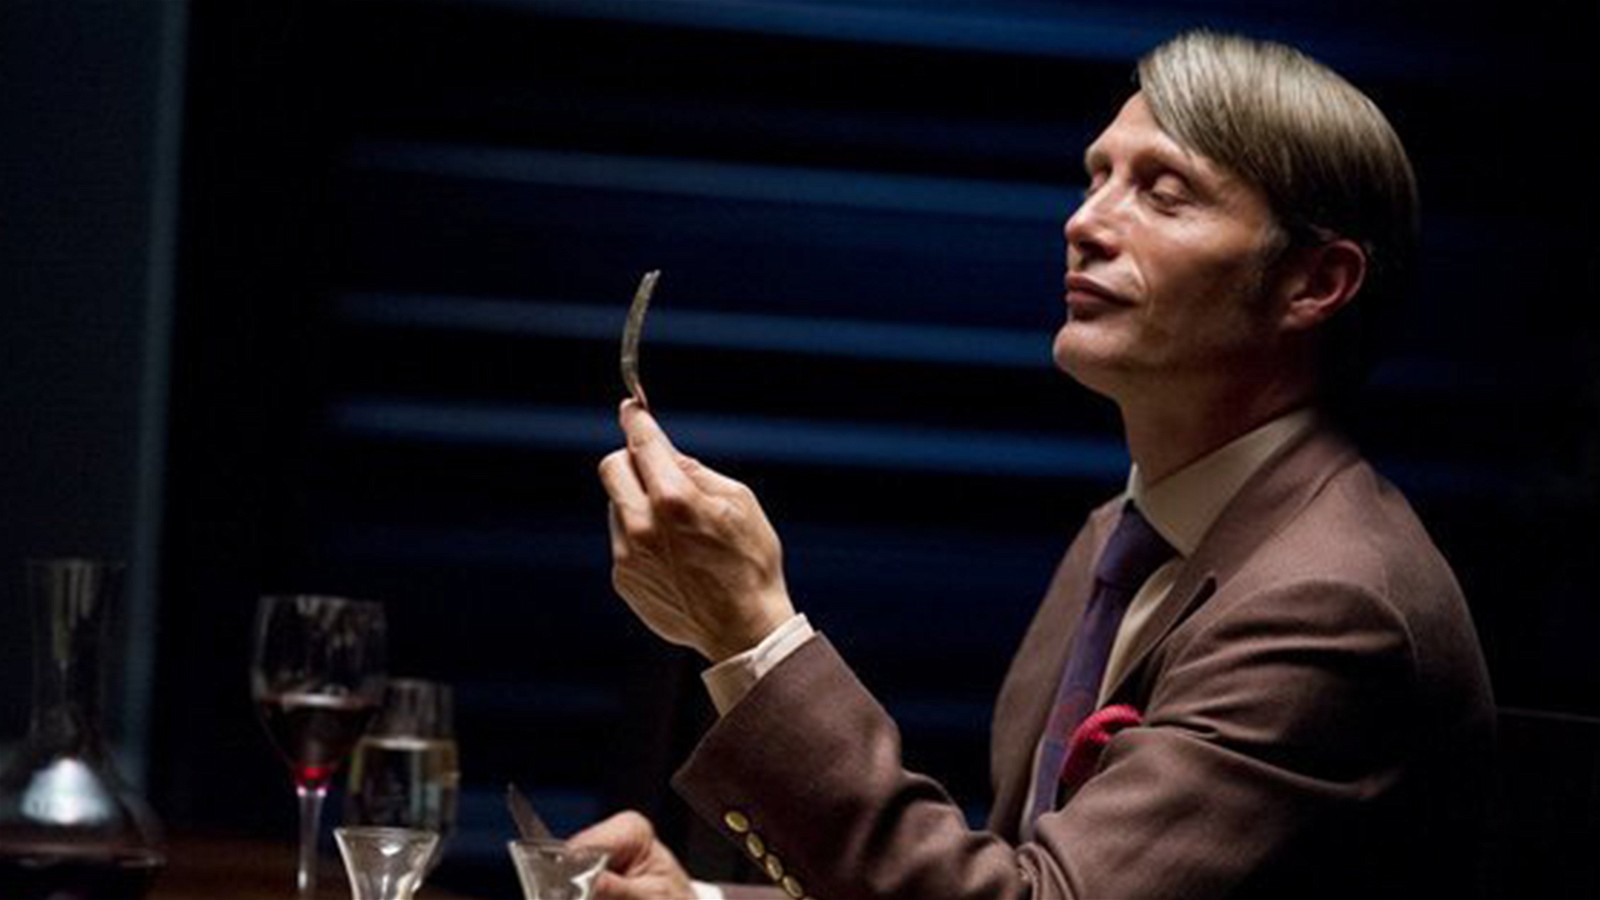 Mads Mikkelsen appears as Dr. Hannibal Lecter